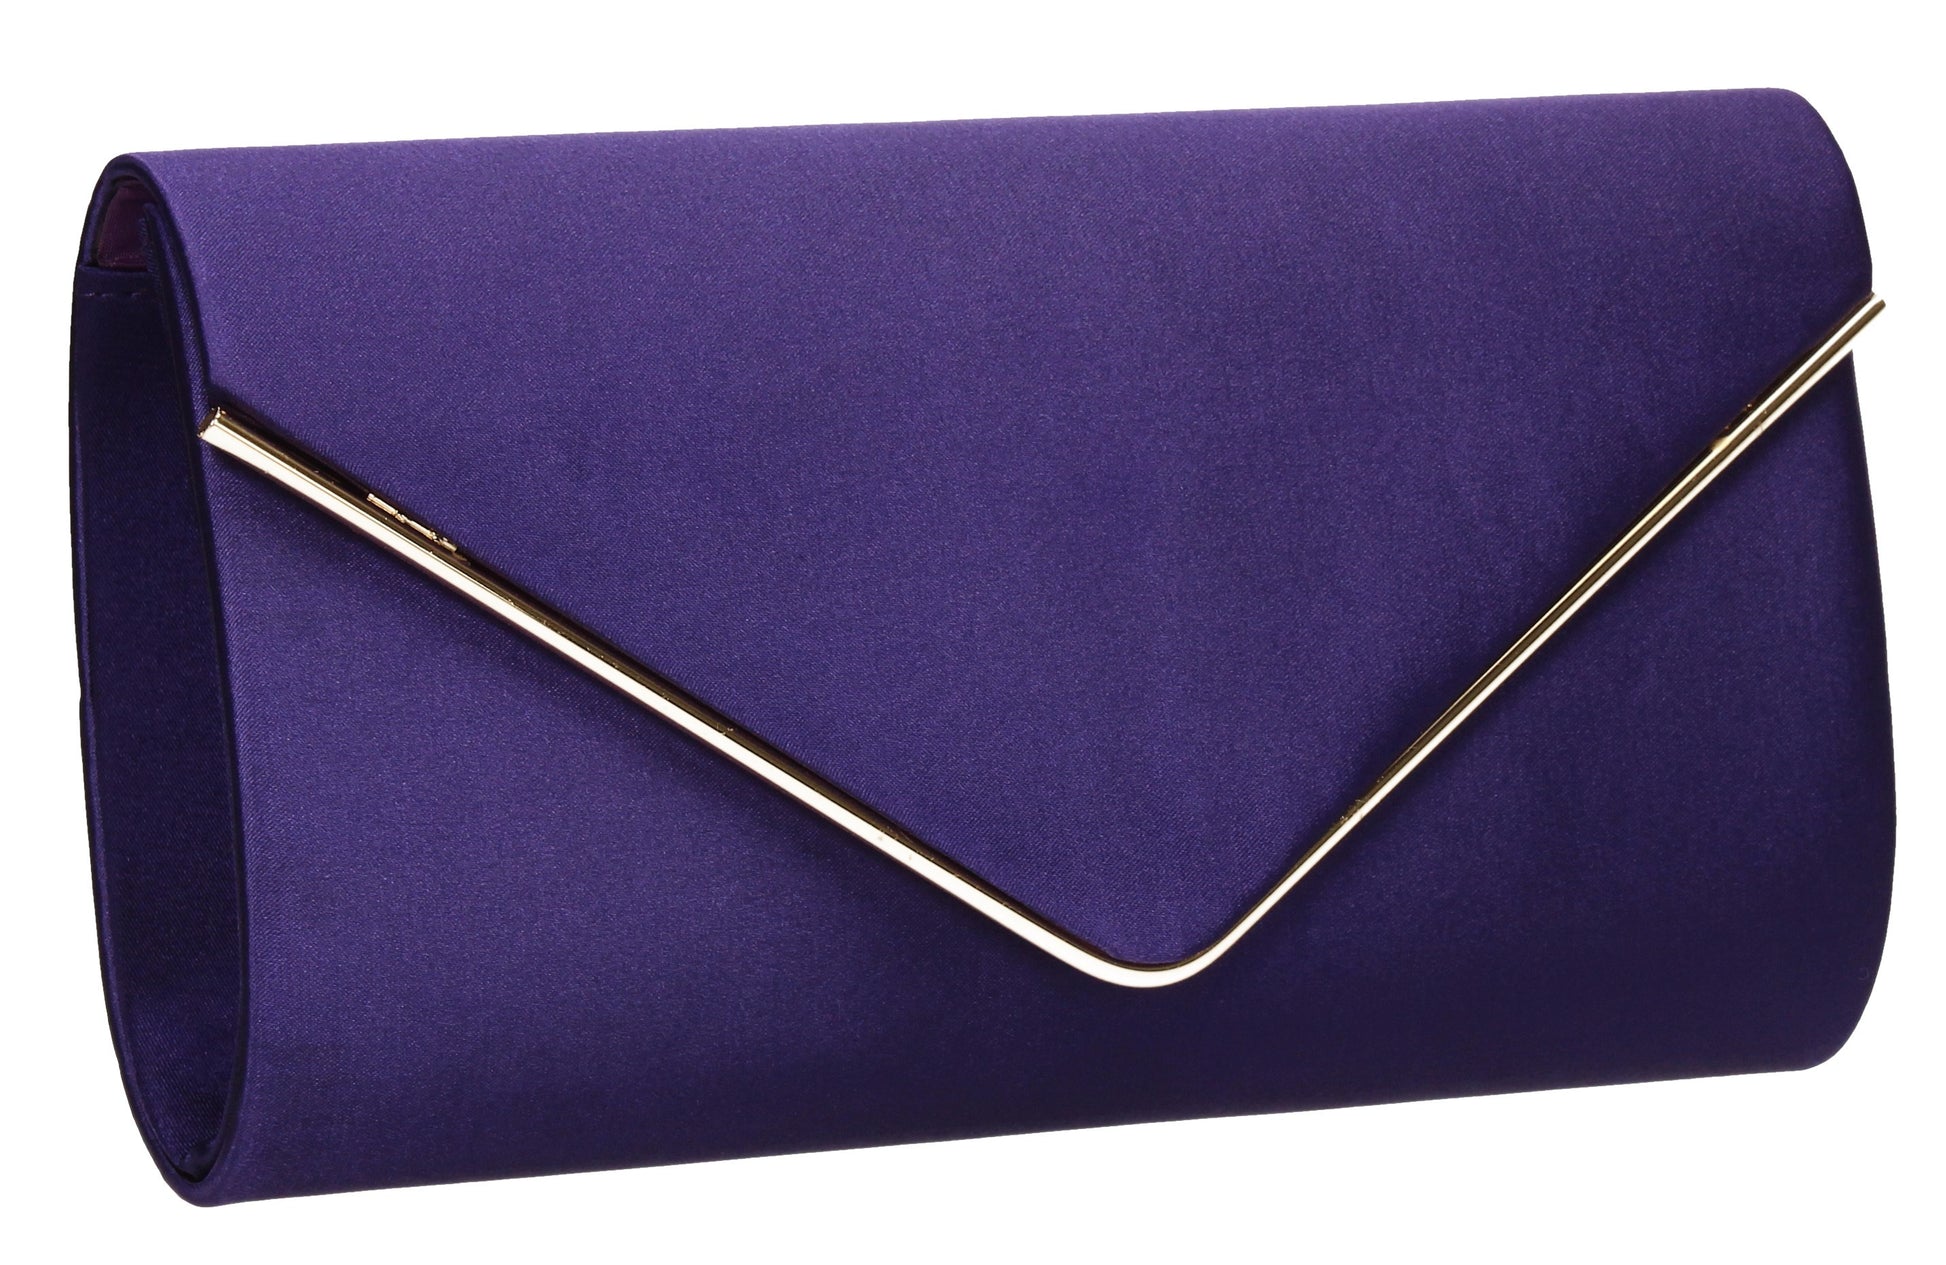 SWANKYSWANS Olivia Clutch Bag Purple Cute Cheap Clutch Bag For Weddings School and Work